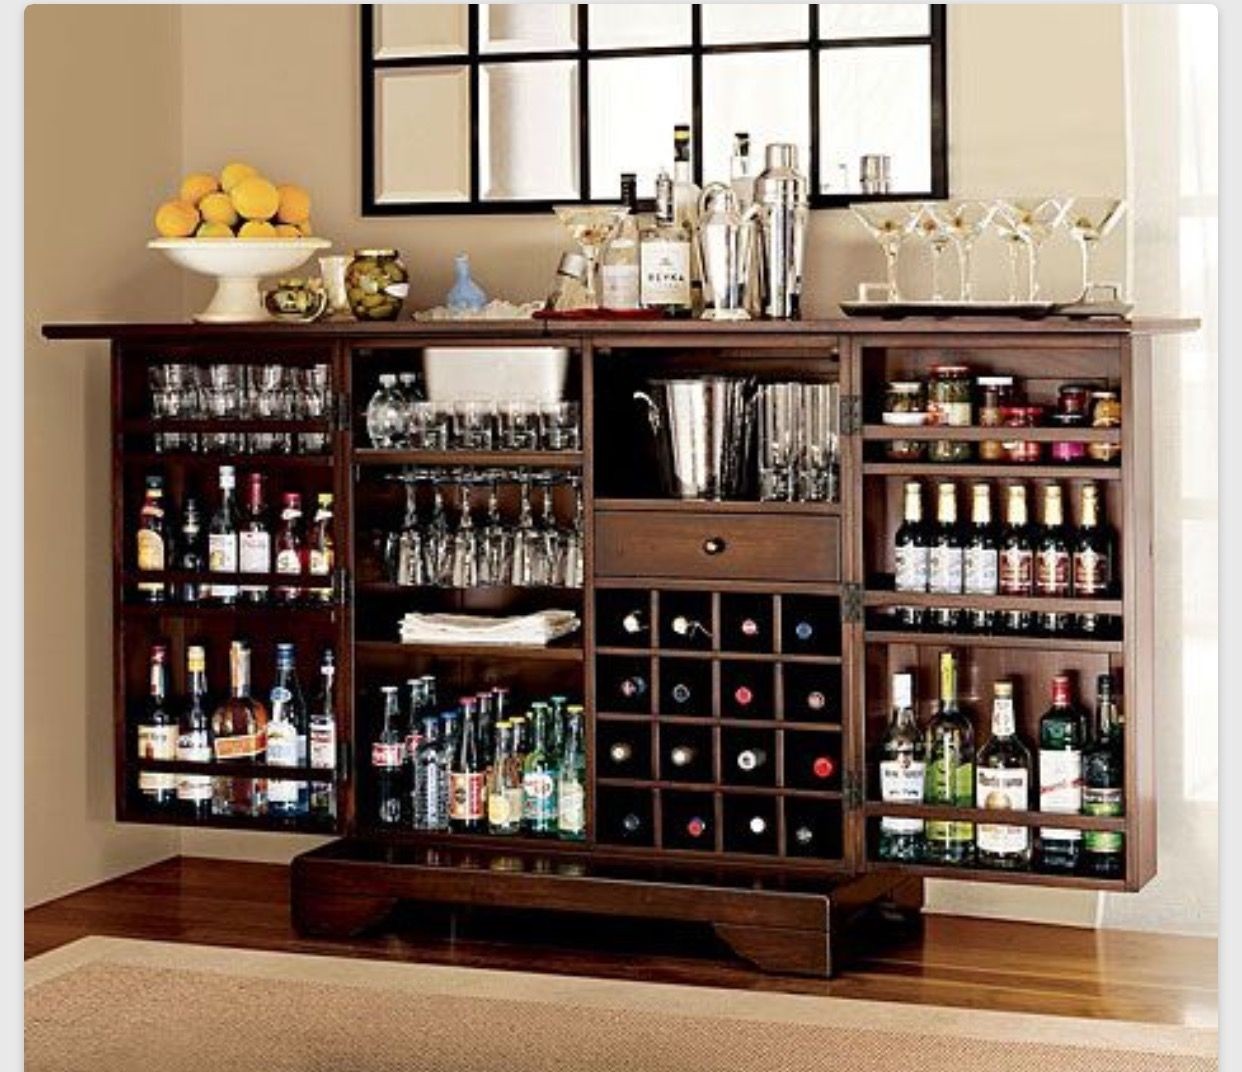 Awesome liquor cabinet